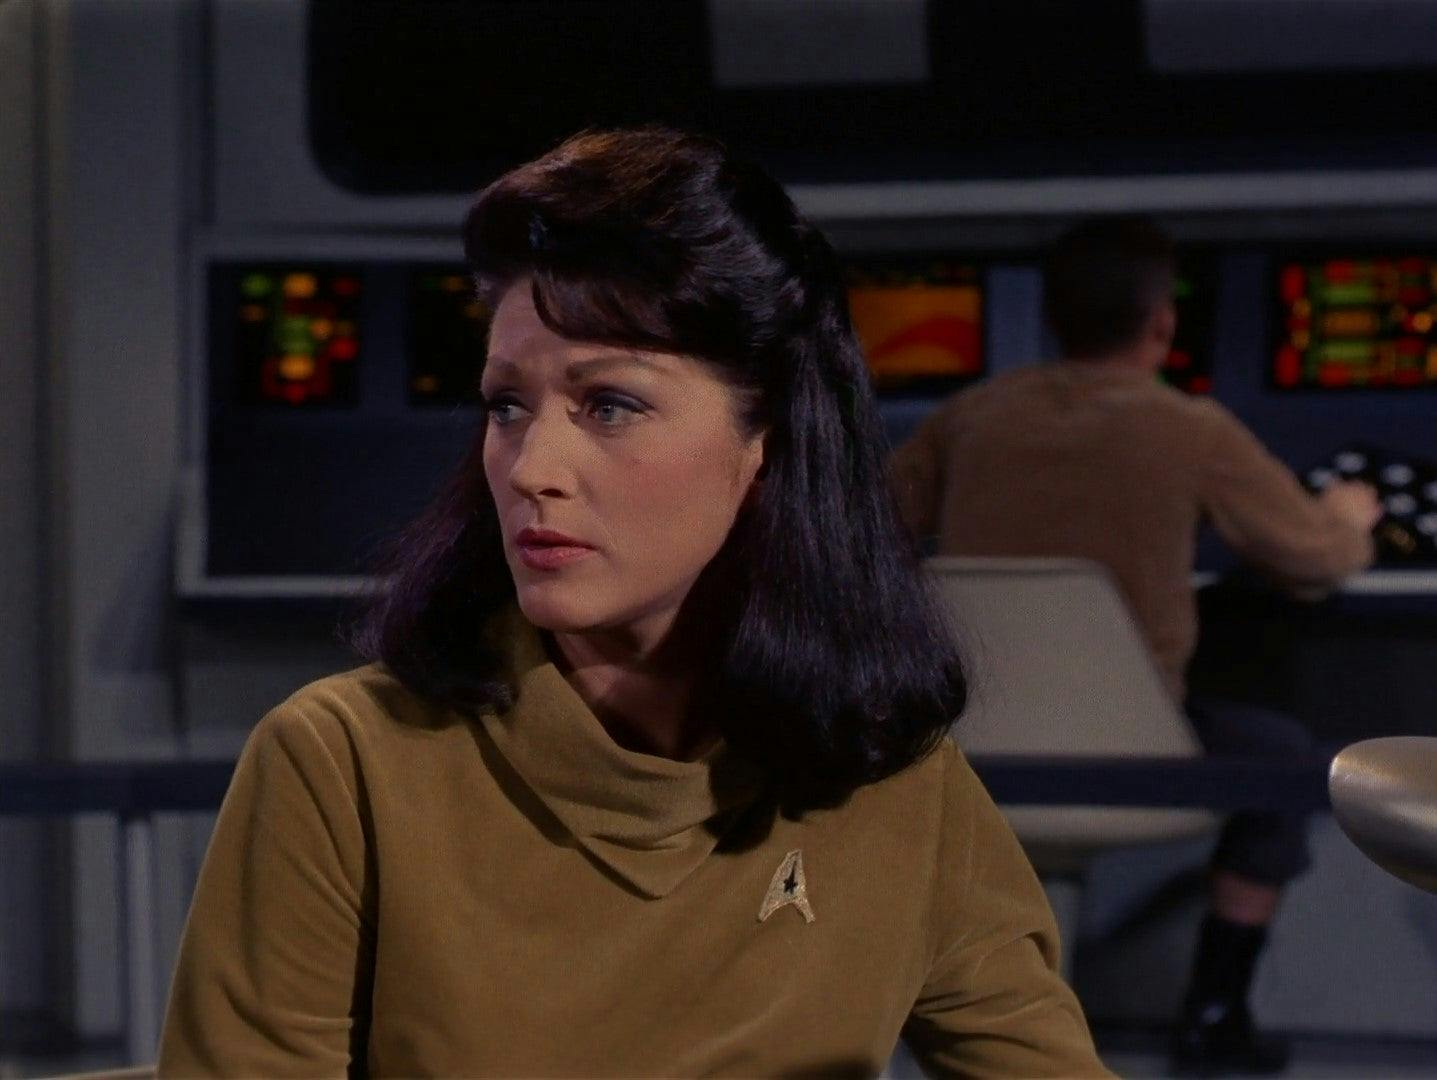 Majel Barrett-Roddenberry, Star Trek’s first lady